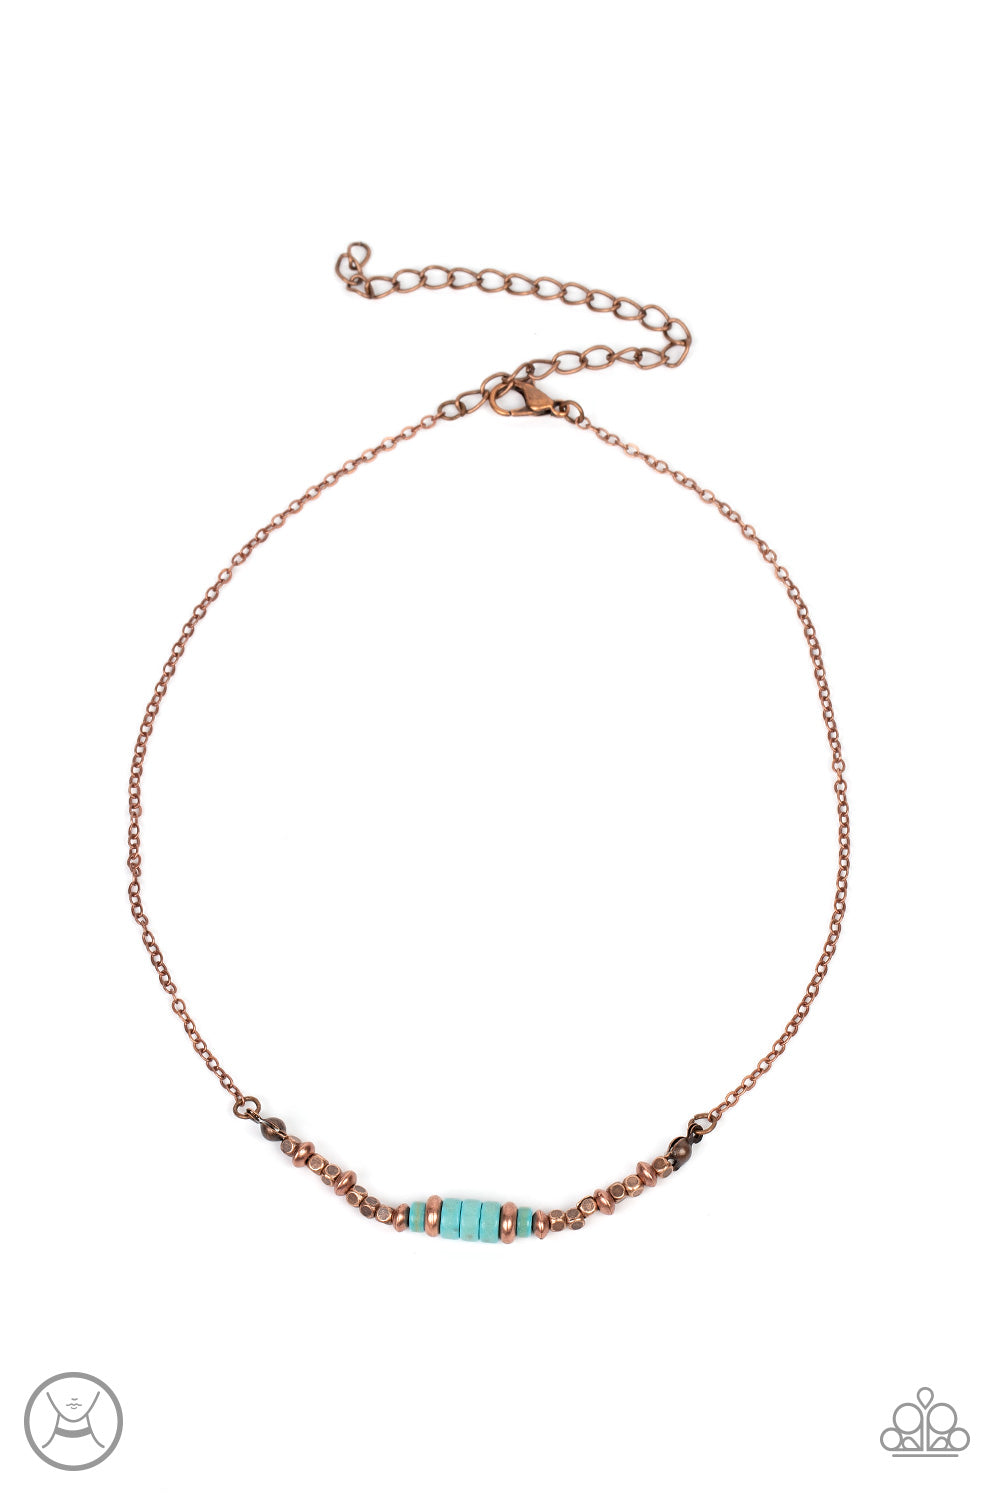 Retro Rejuvenation - copper - Paparazzi necklace